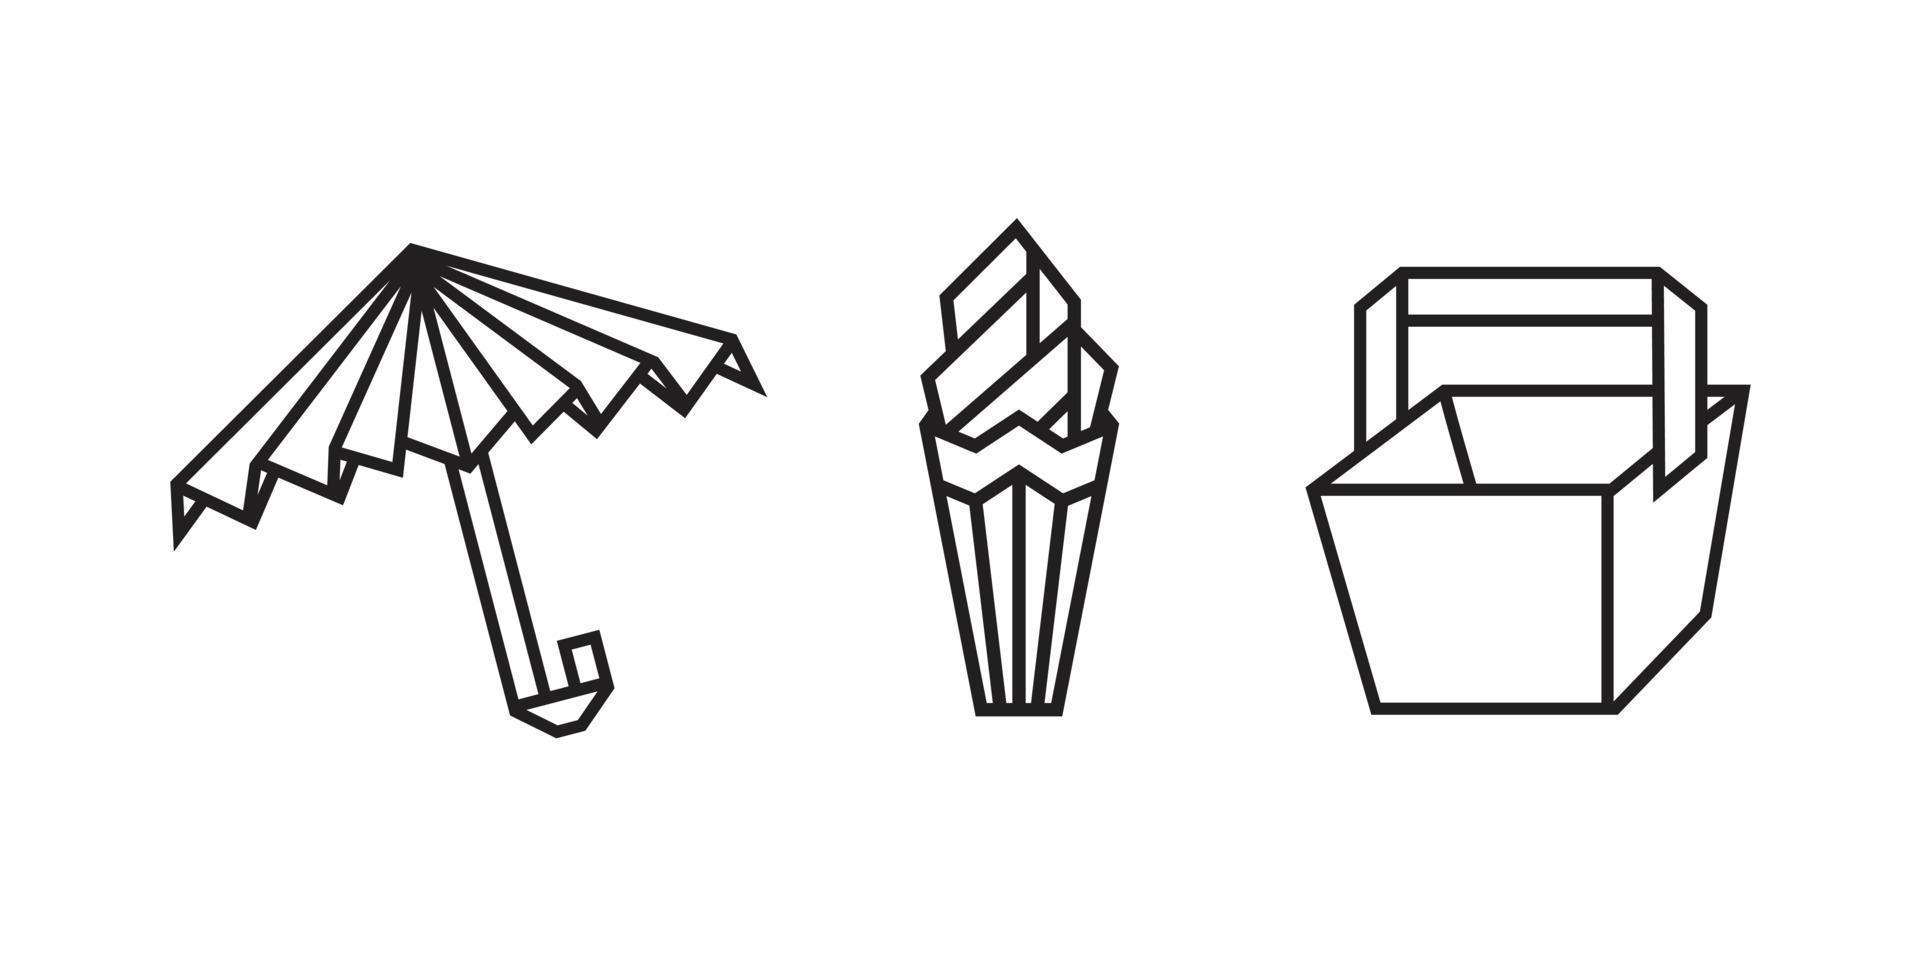 illustrations de trucs de vacances dans un style origami vecteur